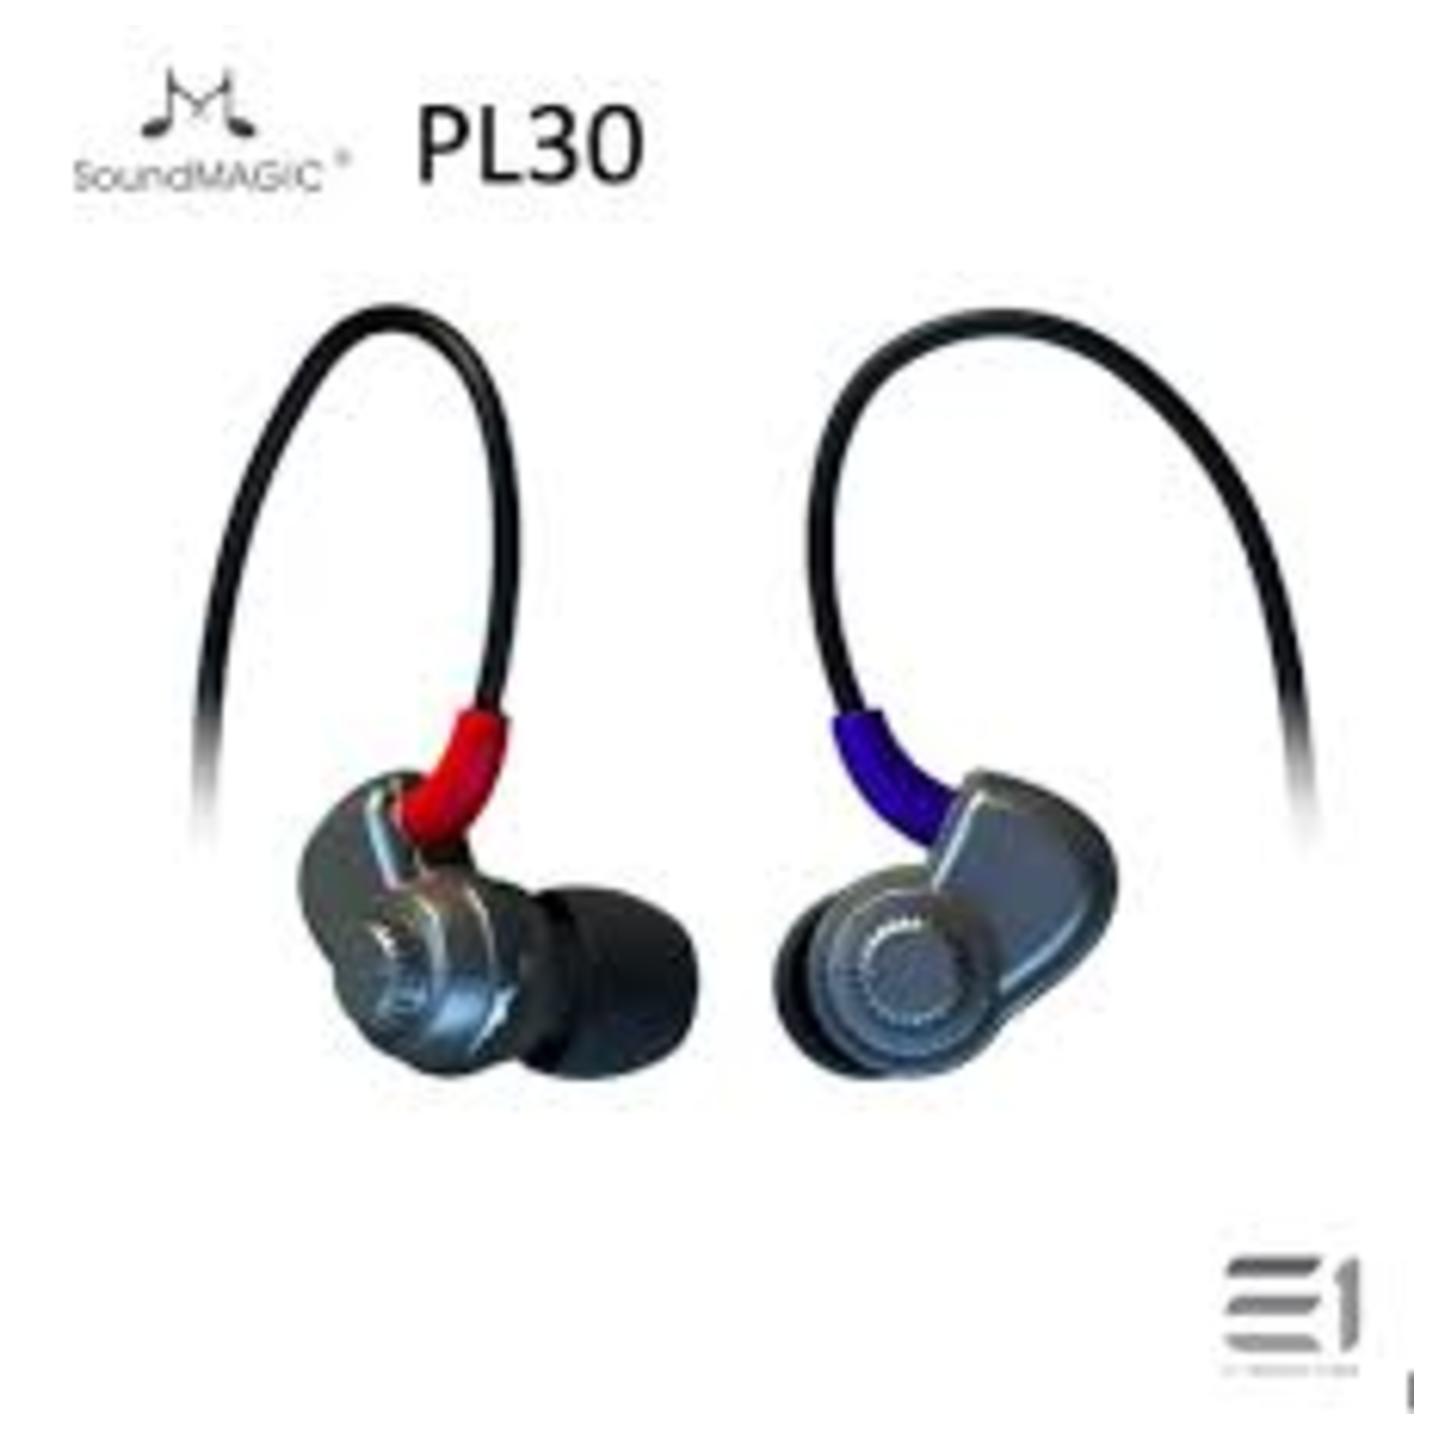 SoundMAGIC PL30 Noise Isolating In-Ear Earphone